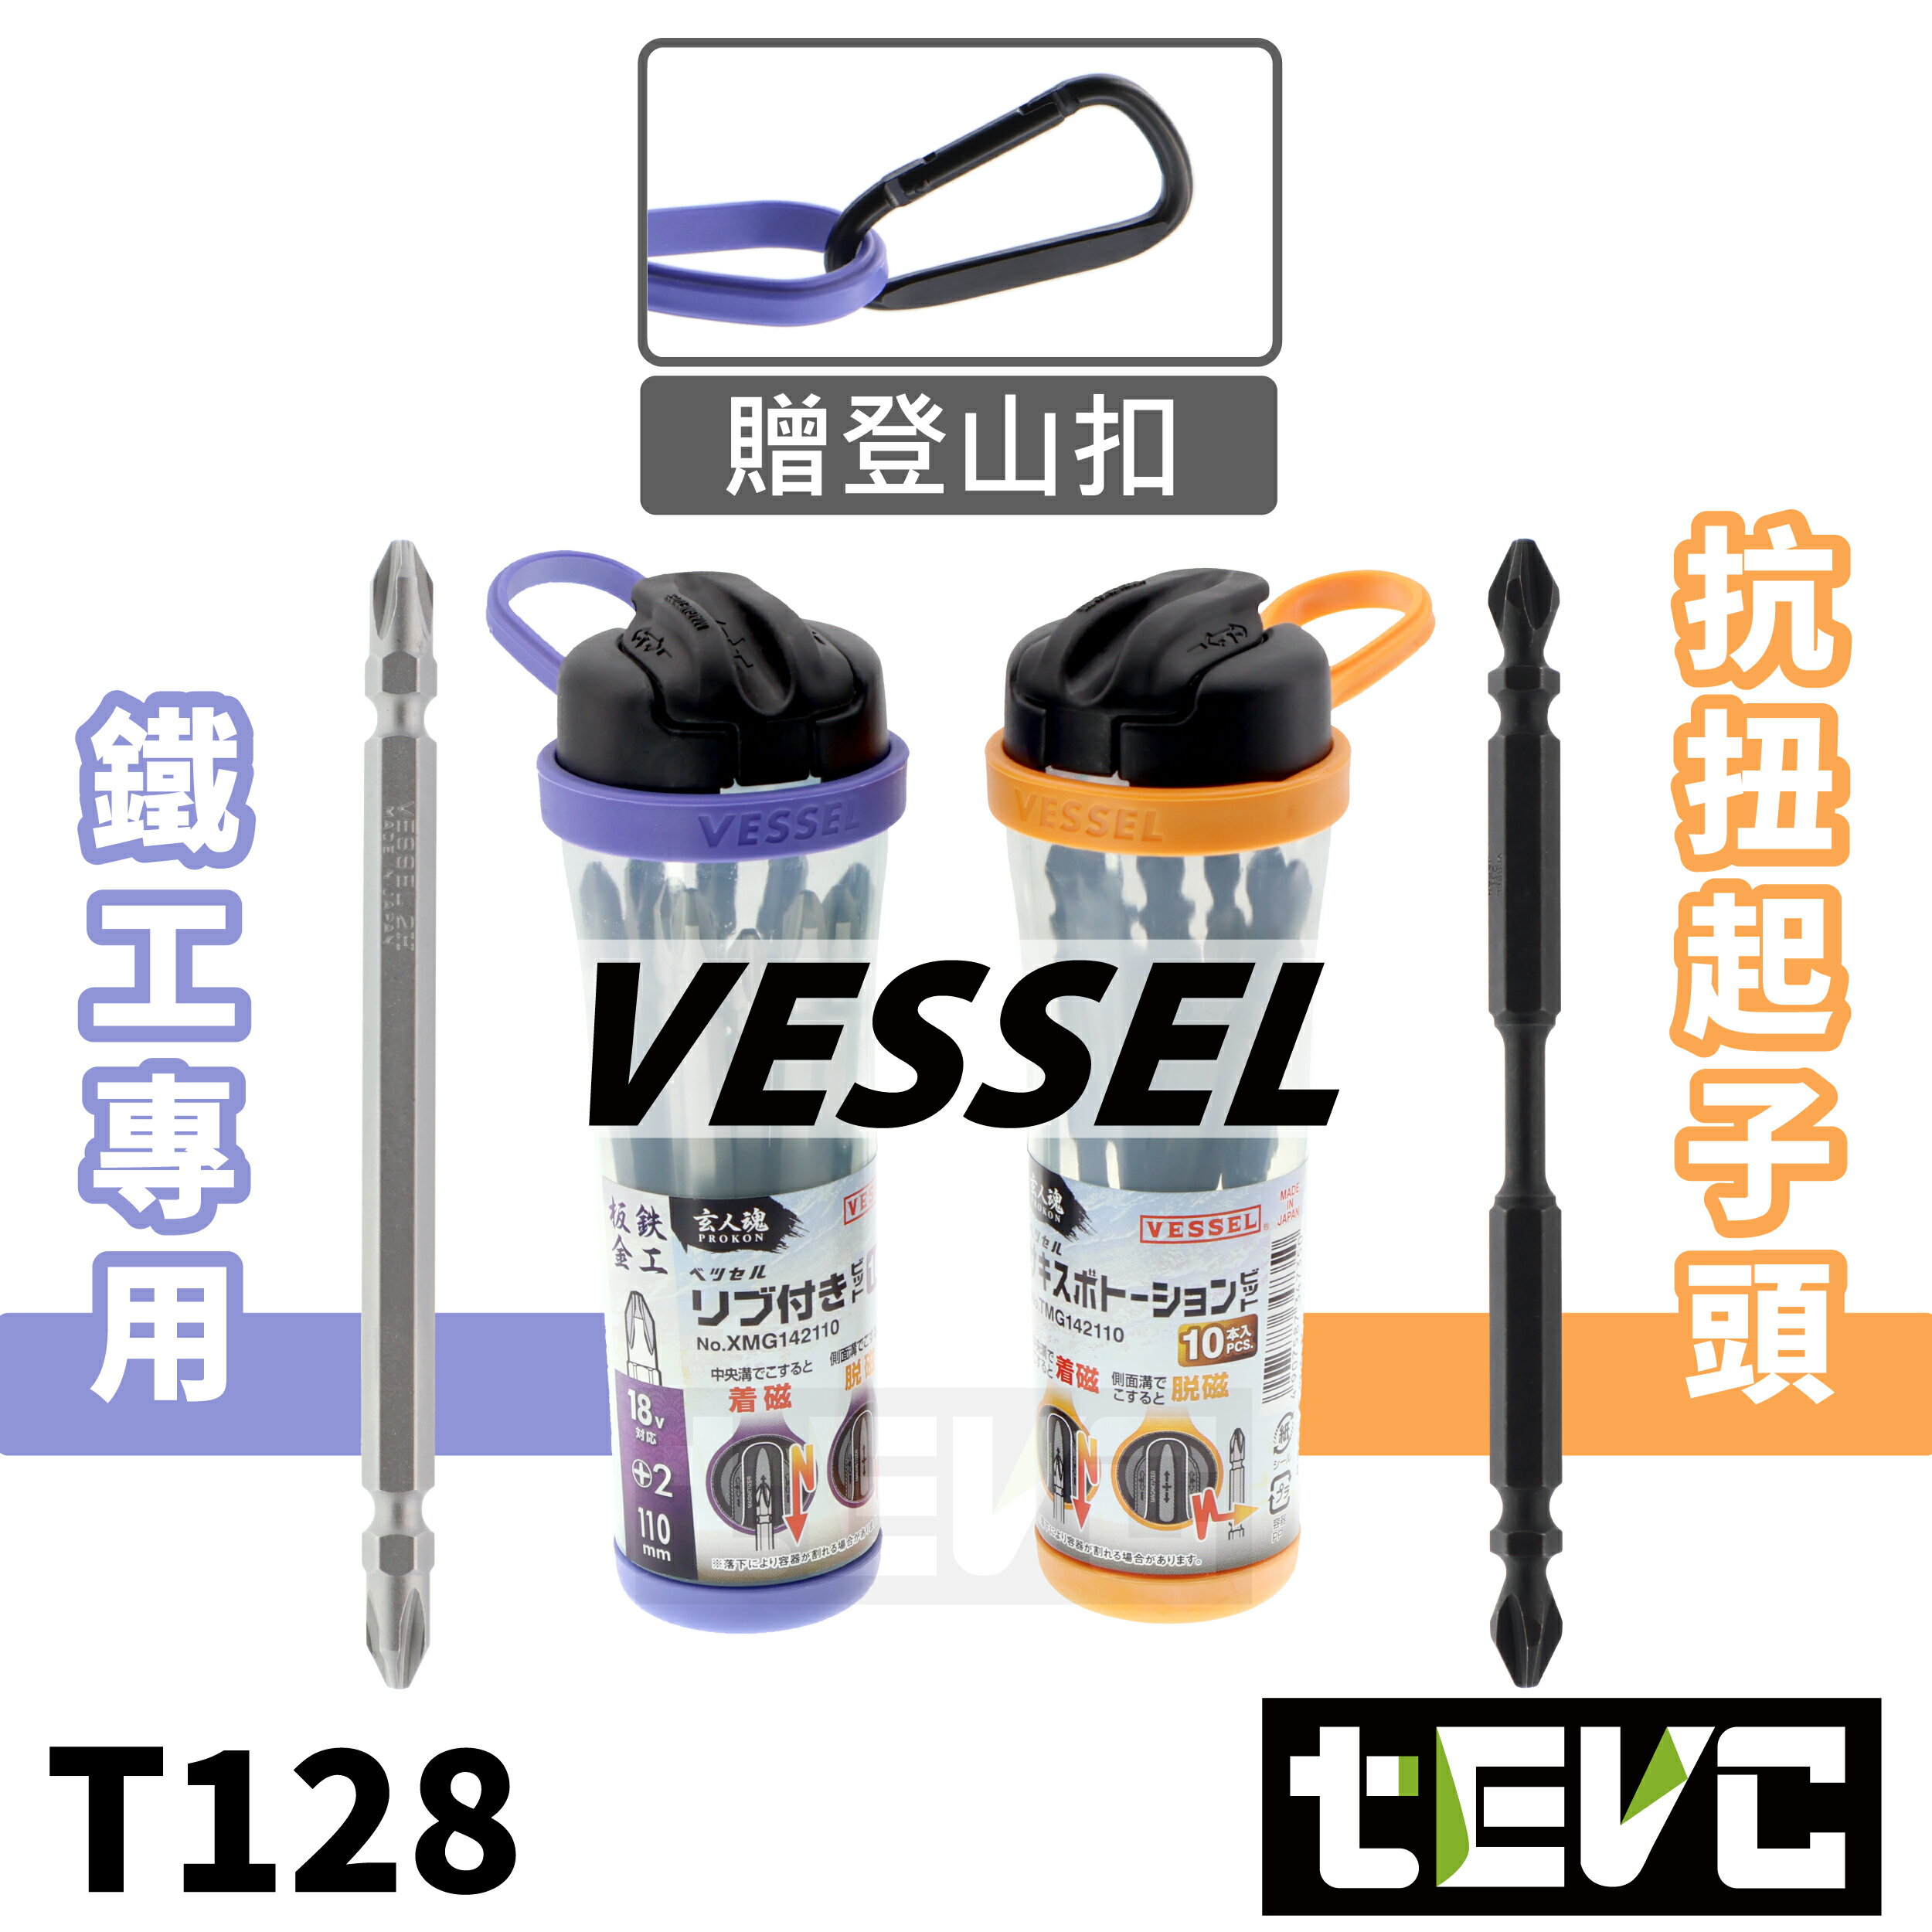 《tevc》日本製 VESSEL 高扭力 十字 雙頭 起子頭 高強度 電動起子 批頭 加磁器 退磁器 TMG142110